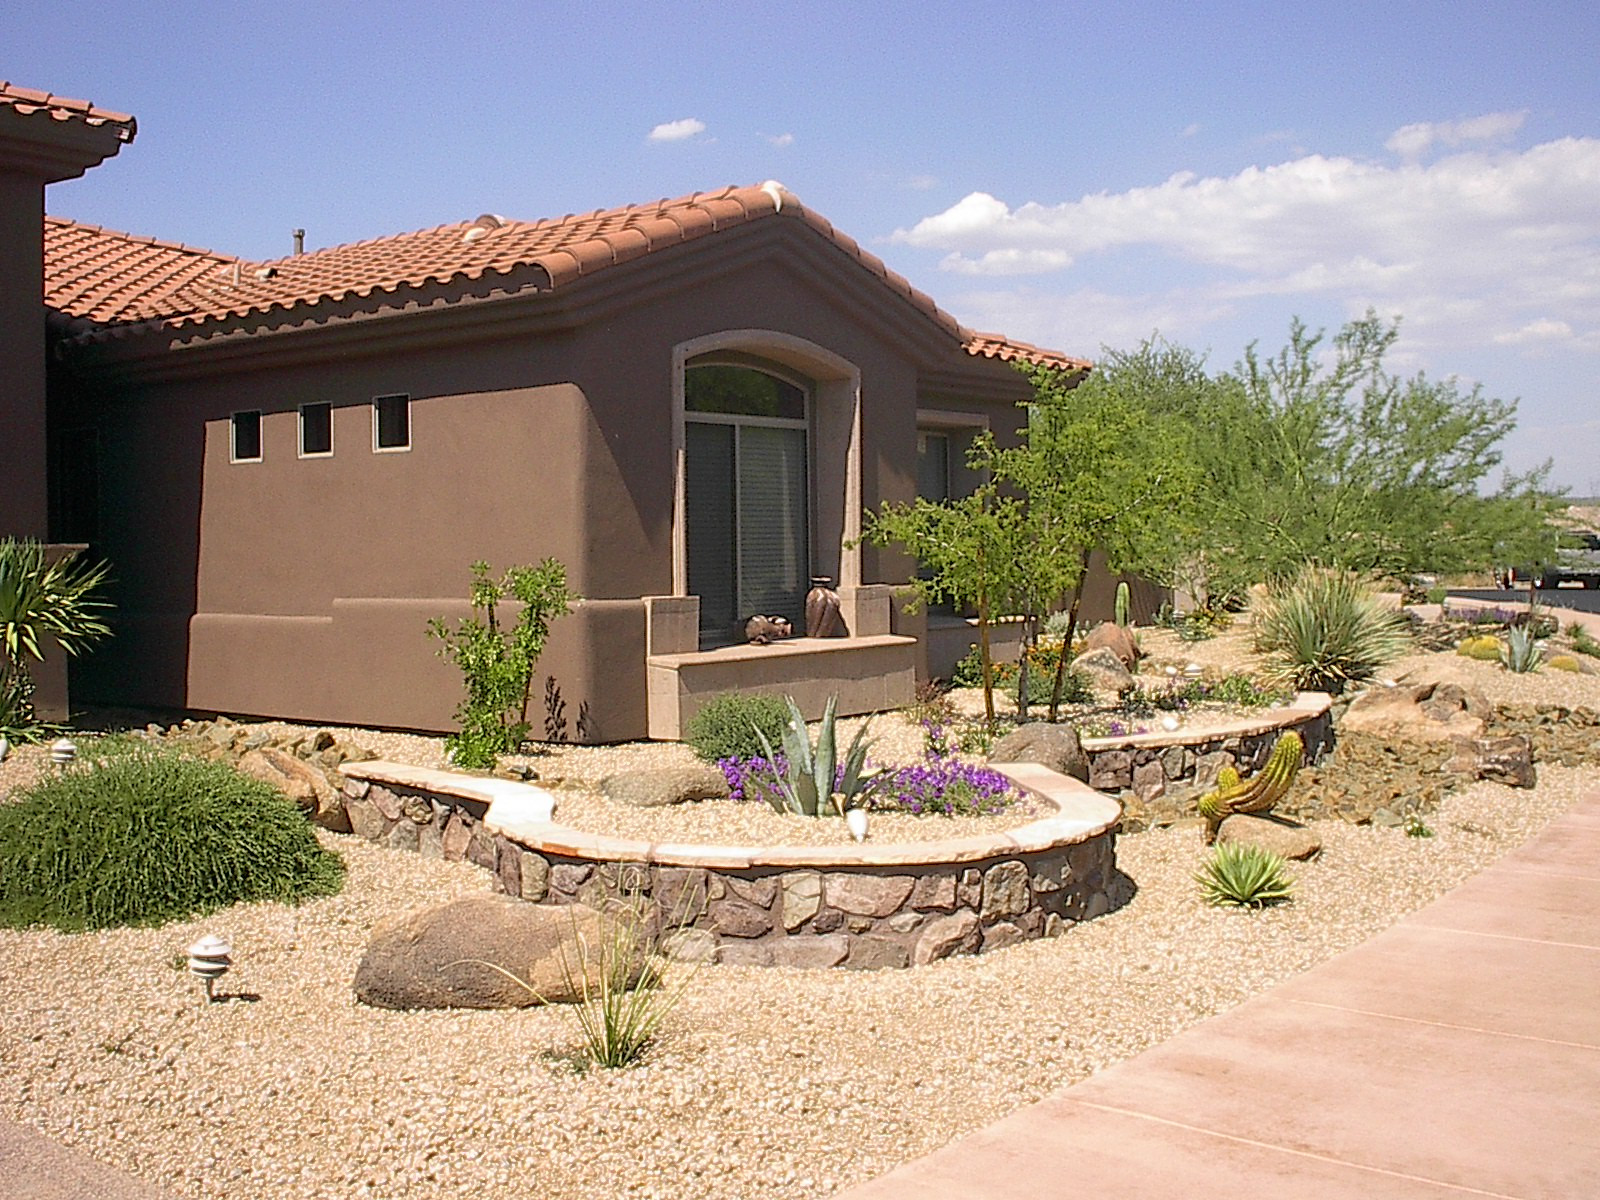 Desert Landscape Front Yard
 Desert Landscaping Ideas to Make Your Backyard Look